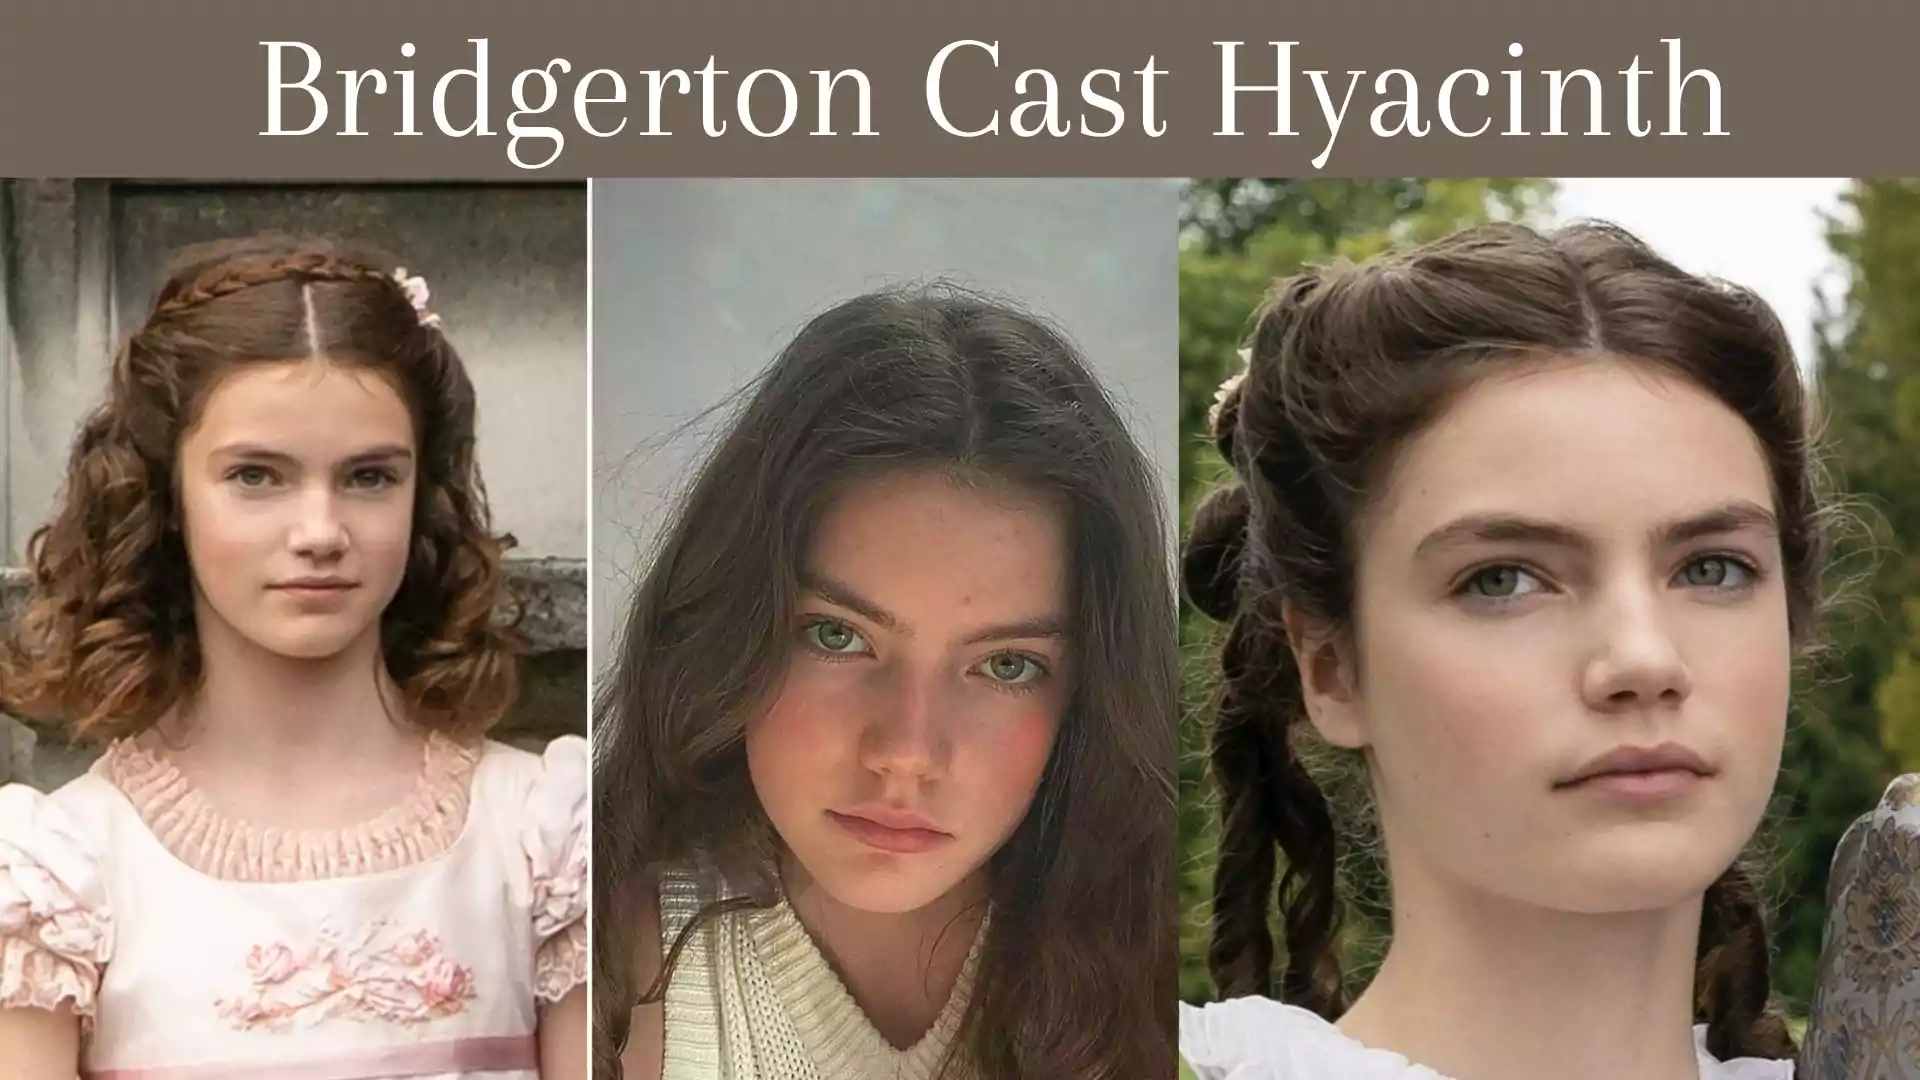 Bridgerton Cast Hyacinth Wallpaper and Images